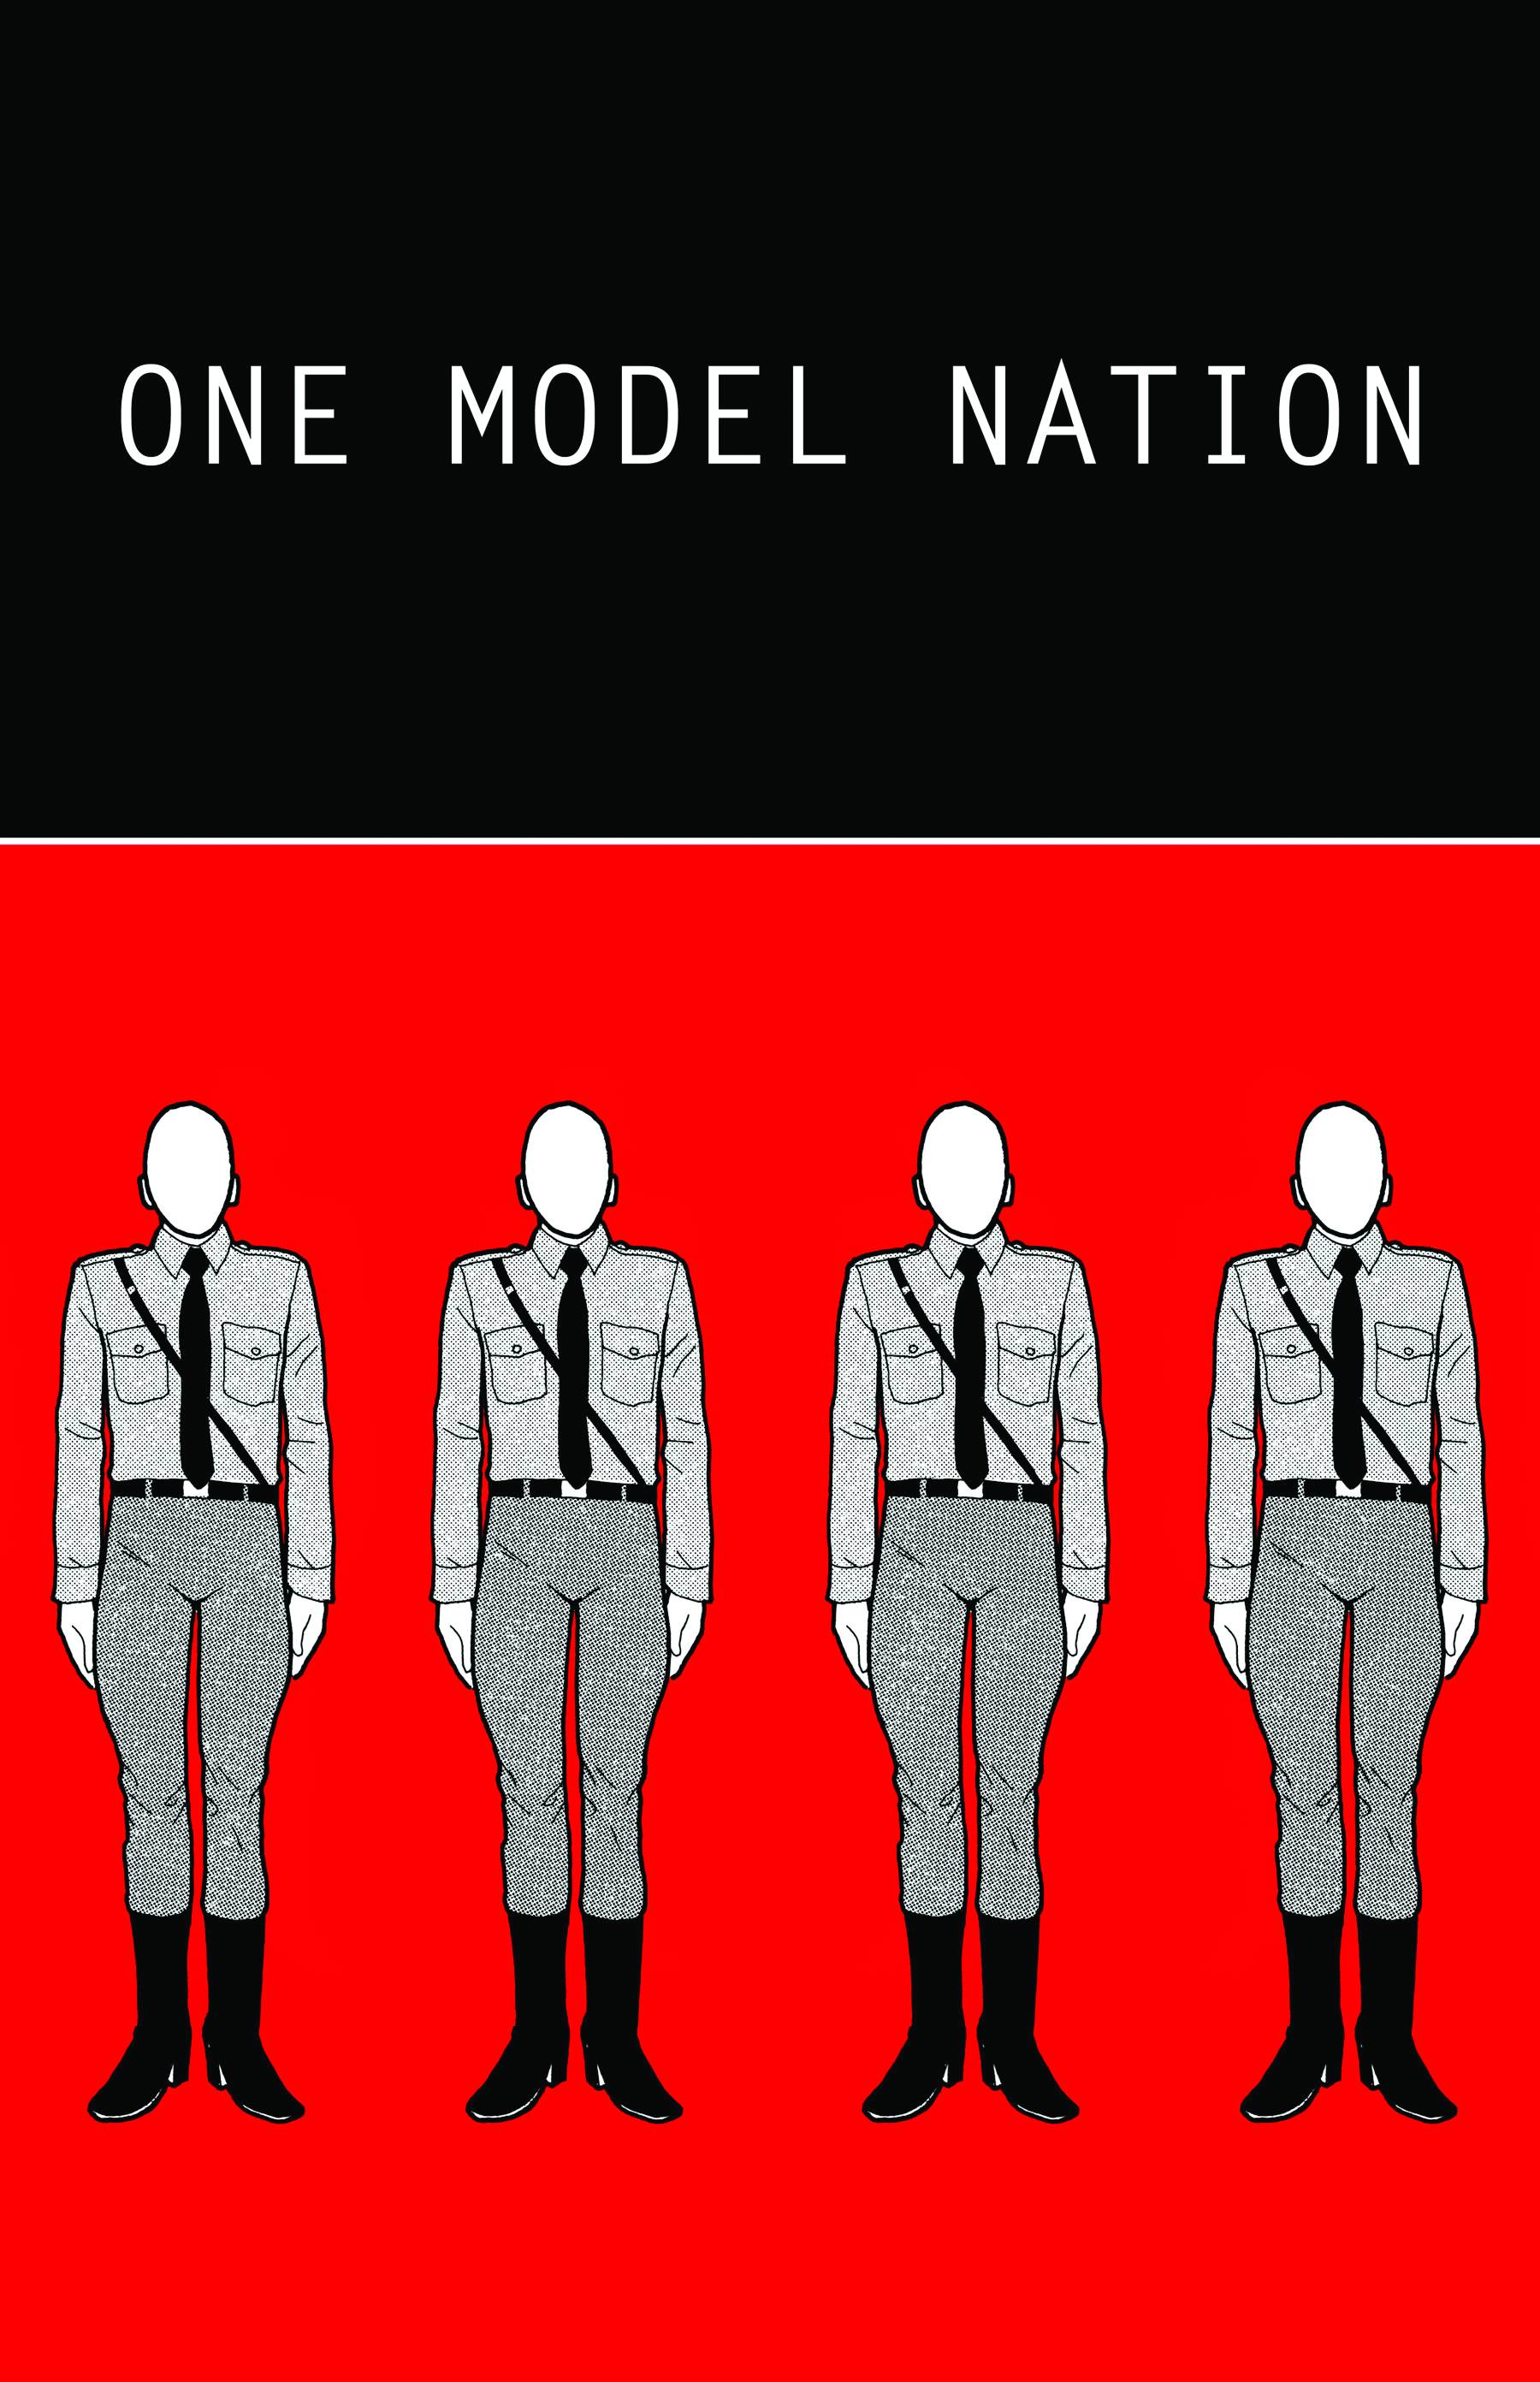 One Model Nation Graphic Novel